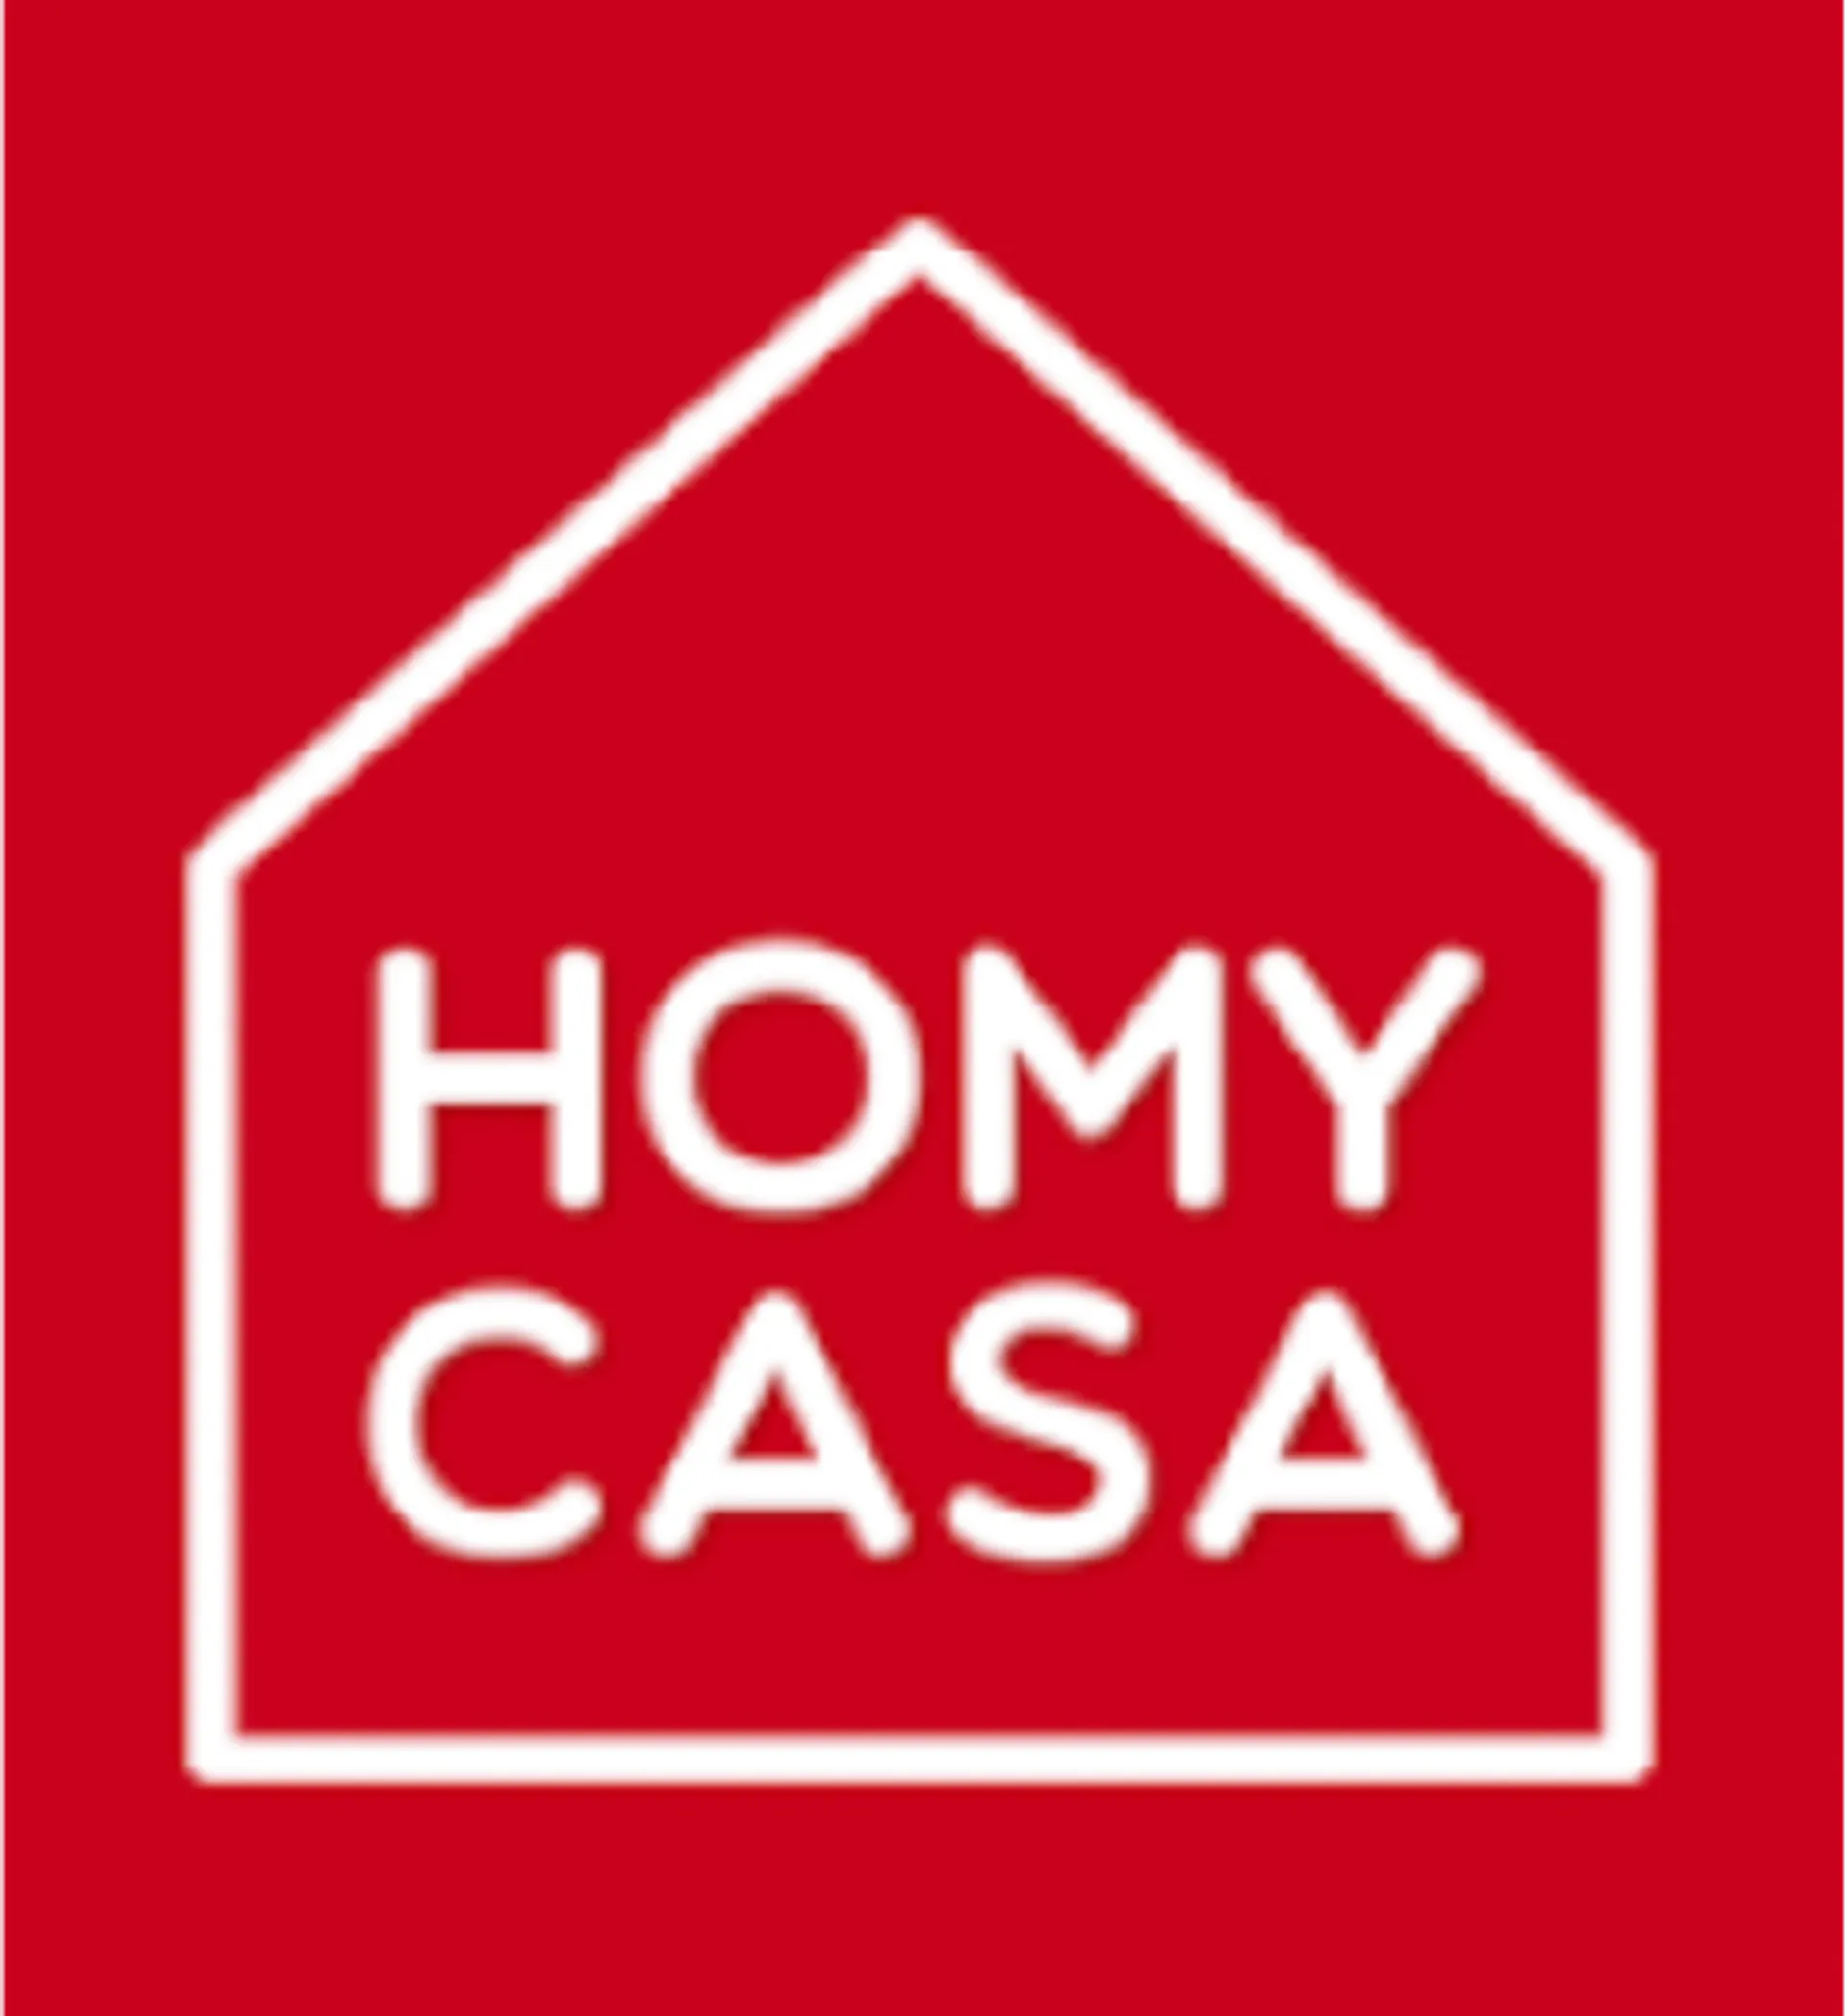 HOMYCASA logo